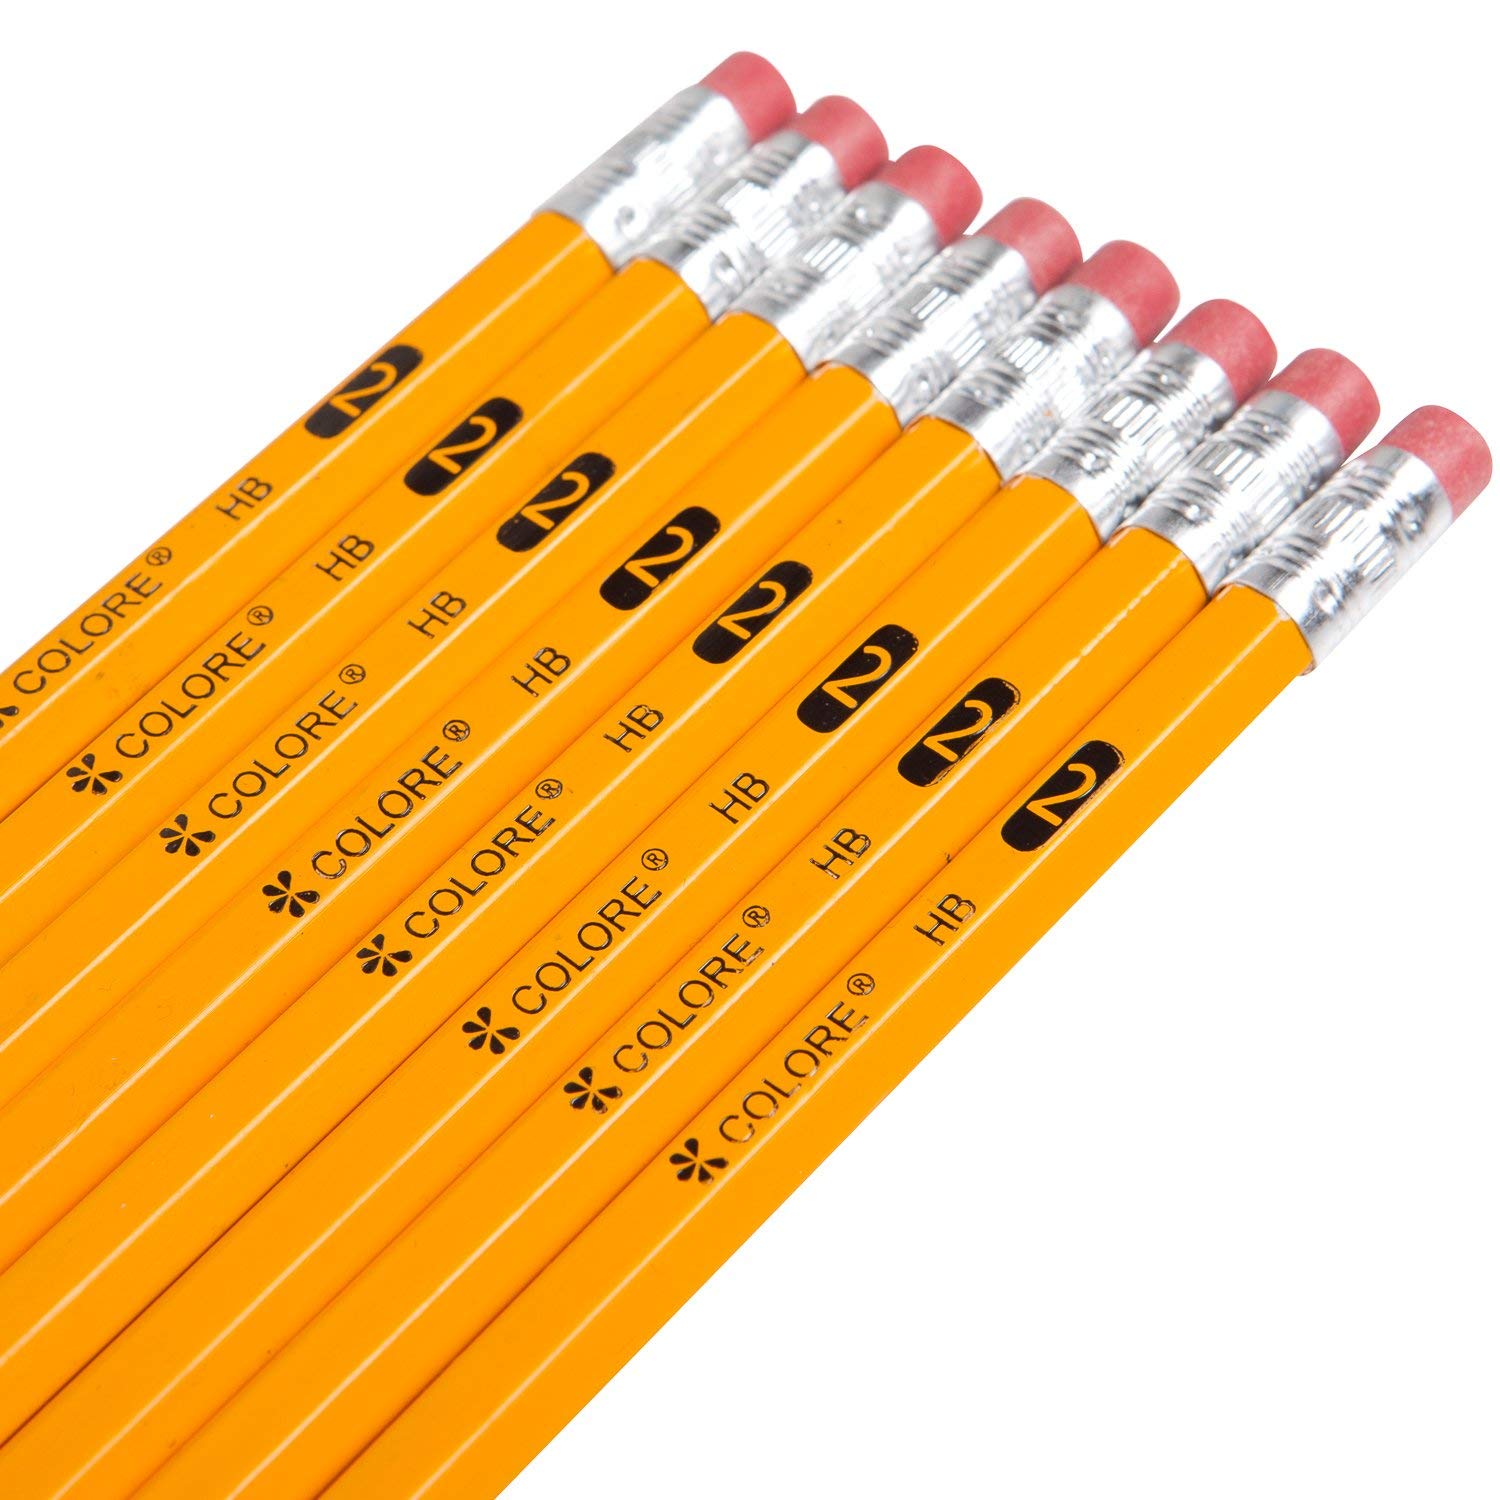 Amazon.com : Colore #2 Pencils With Eraser Tops - HB Graphite/No 2 ...